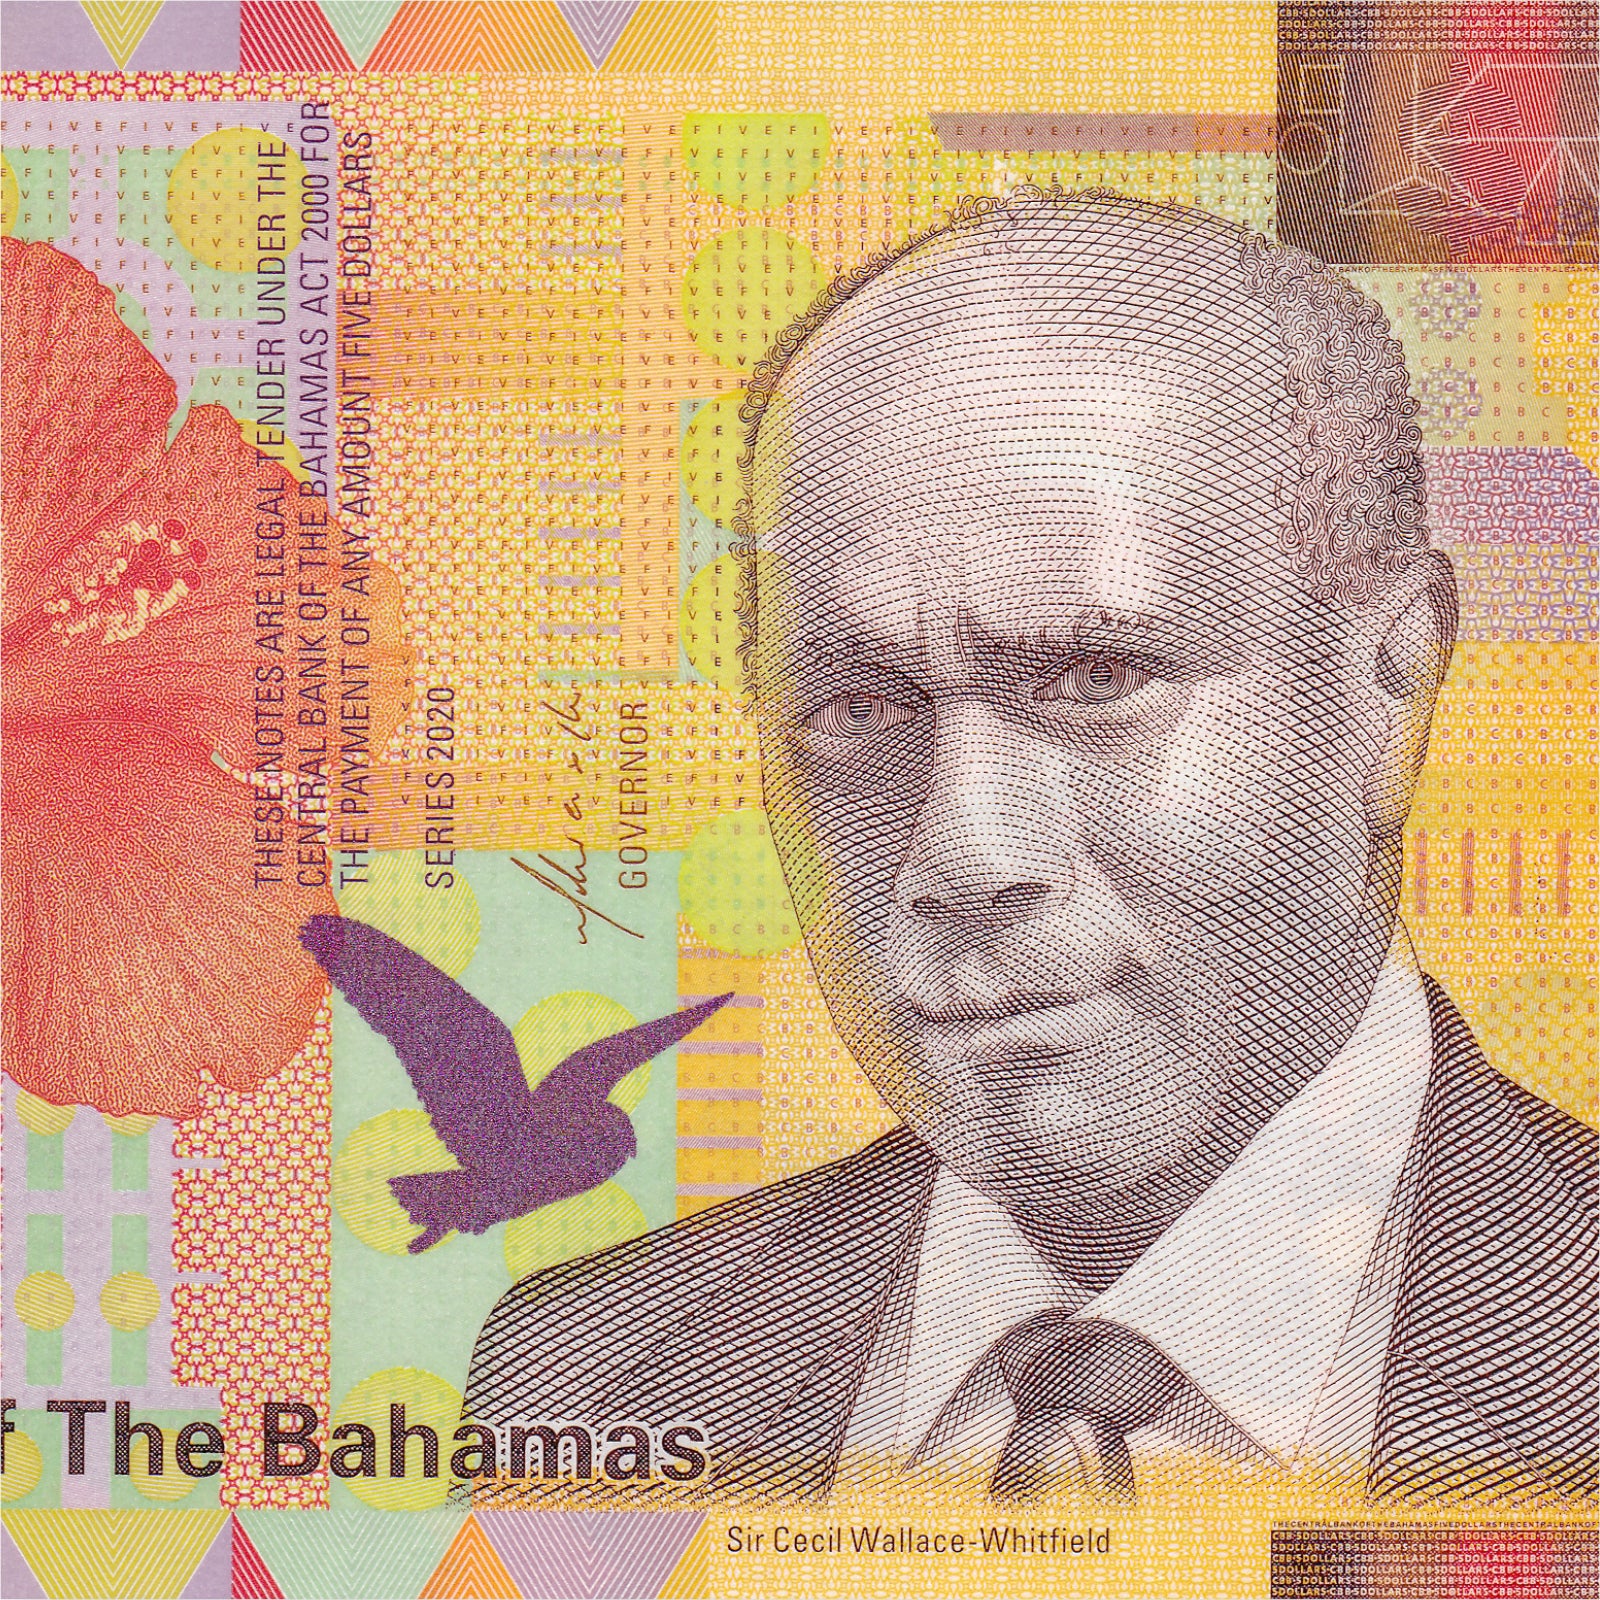 Bahamas 5 Dollars, 2020, B351a, UNC - Robert's World Money - World Banknotes